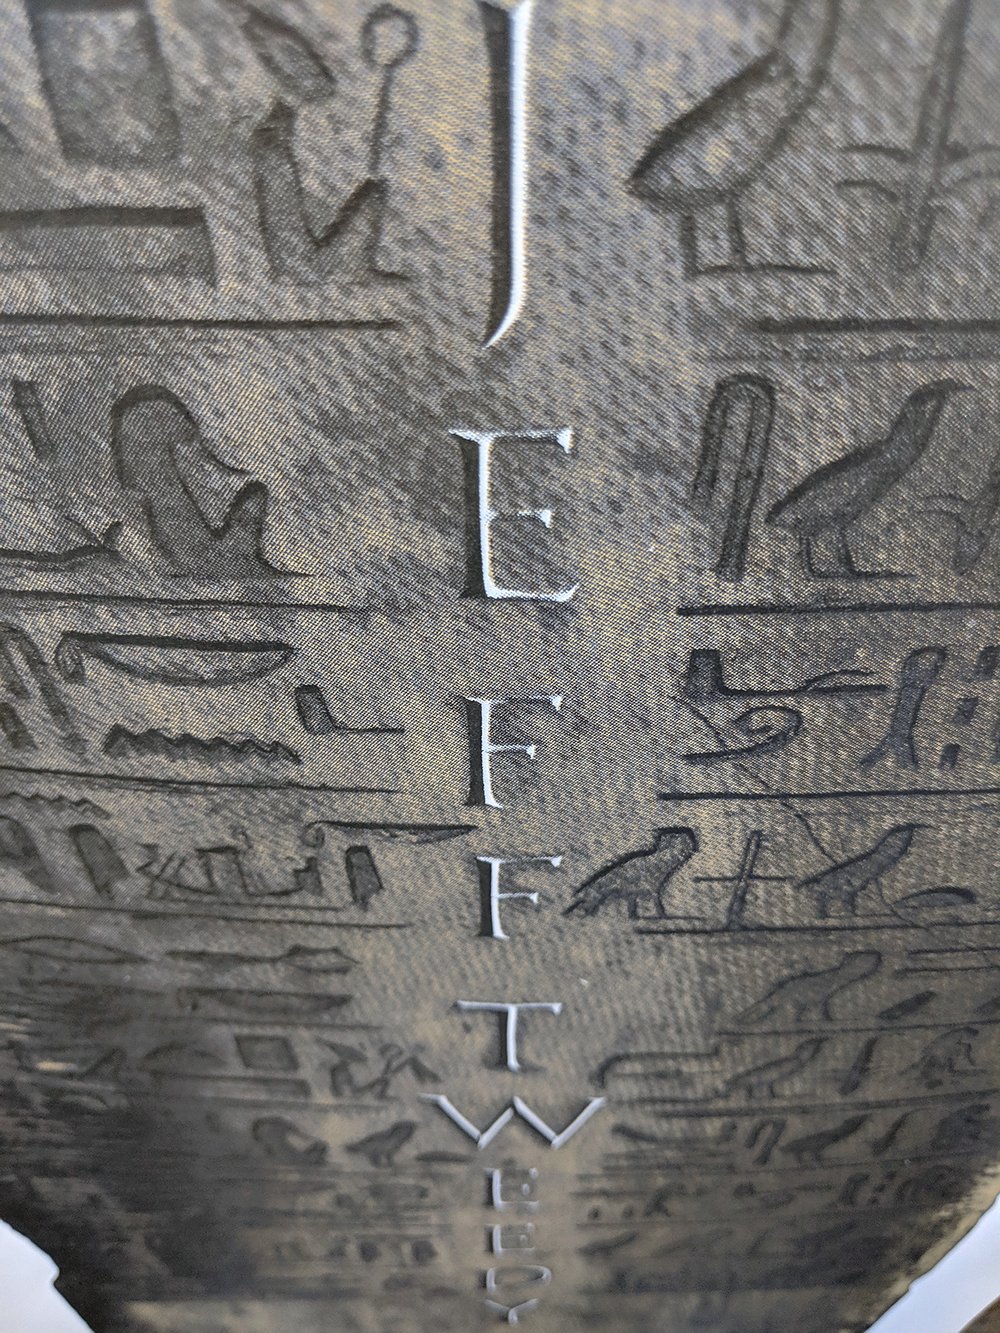 Jeff Tweedy, Indianapolis, IN, The Egypt Room